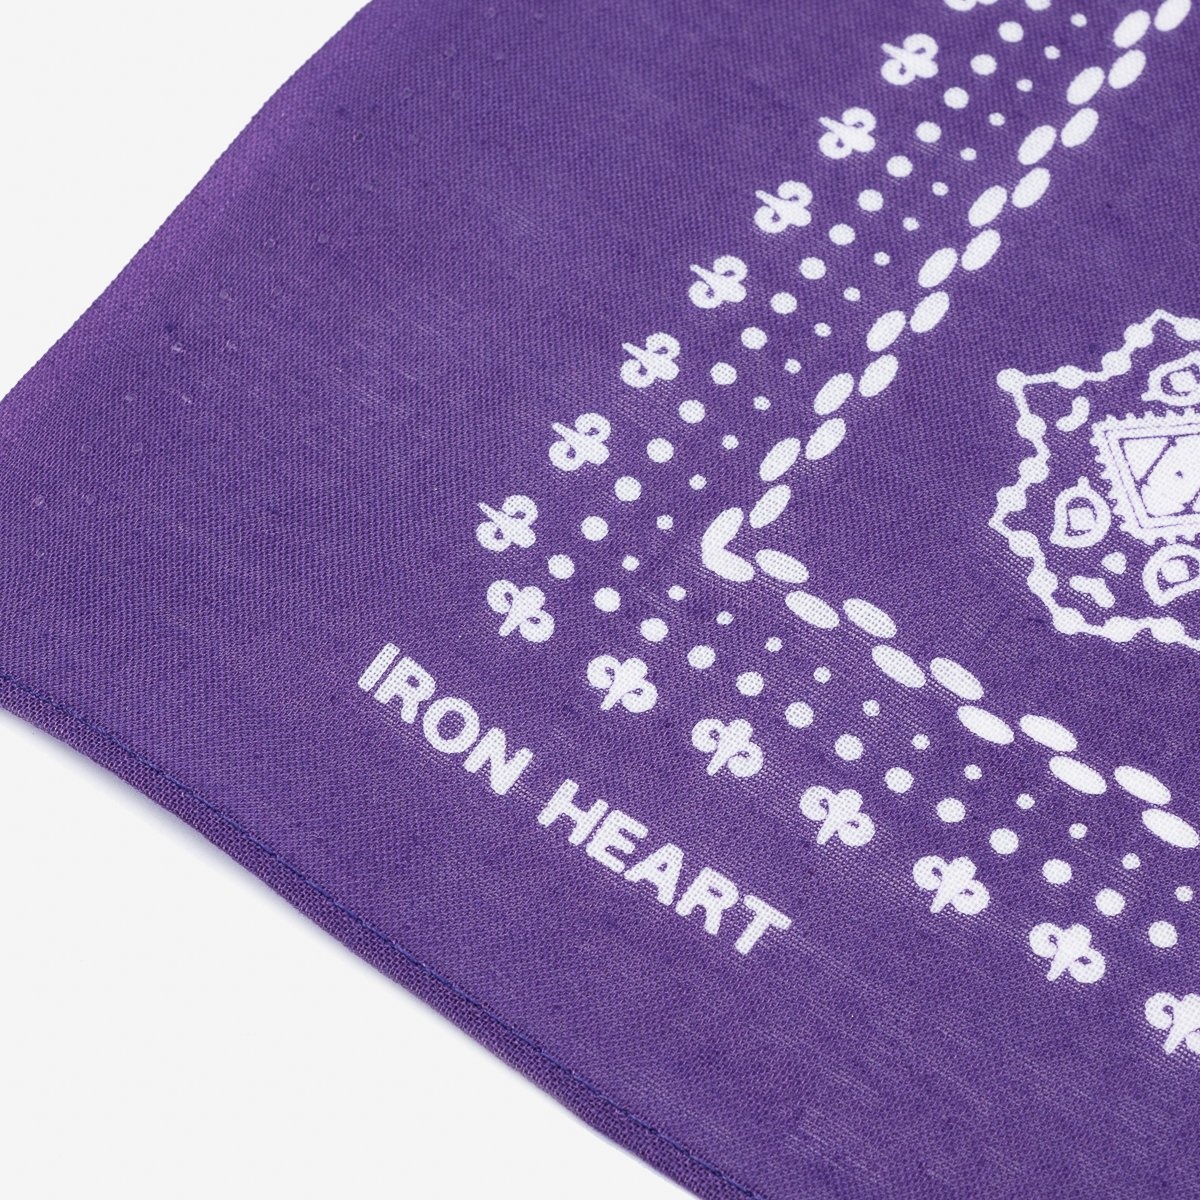 IHG-051-PUR Iron Heart “Bell” Print Bandana - Purple - 4